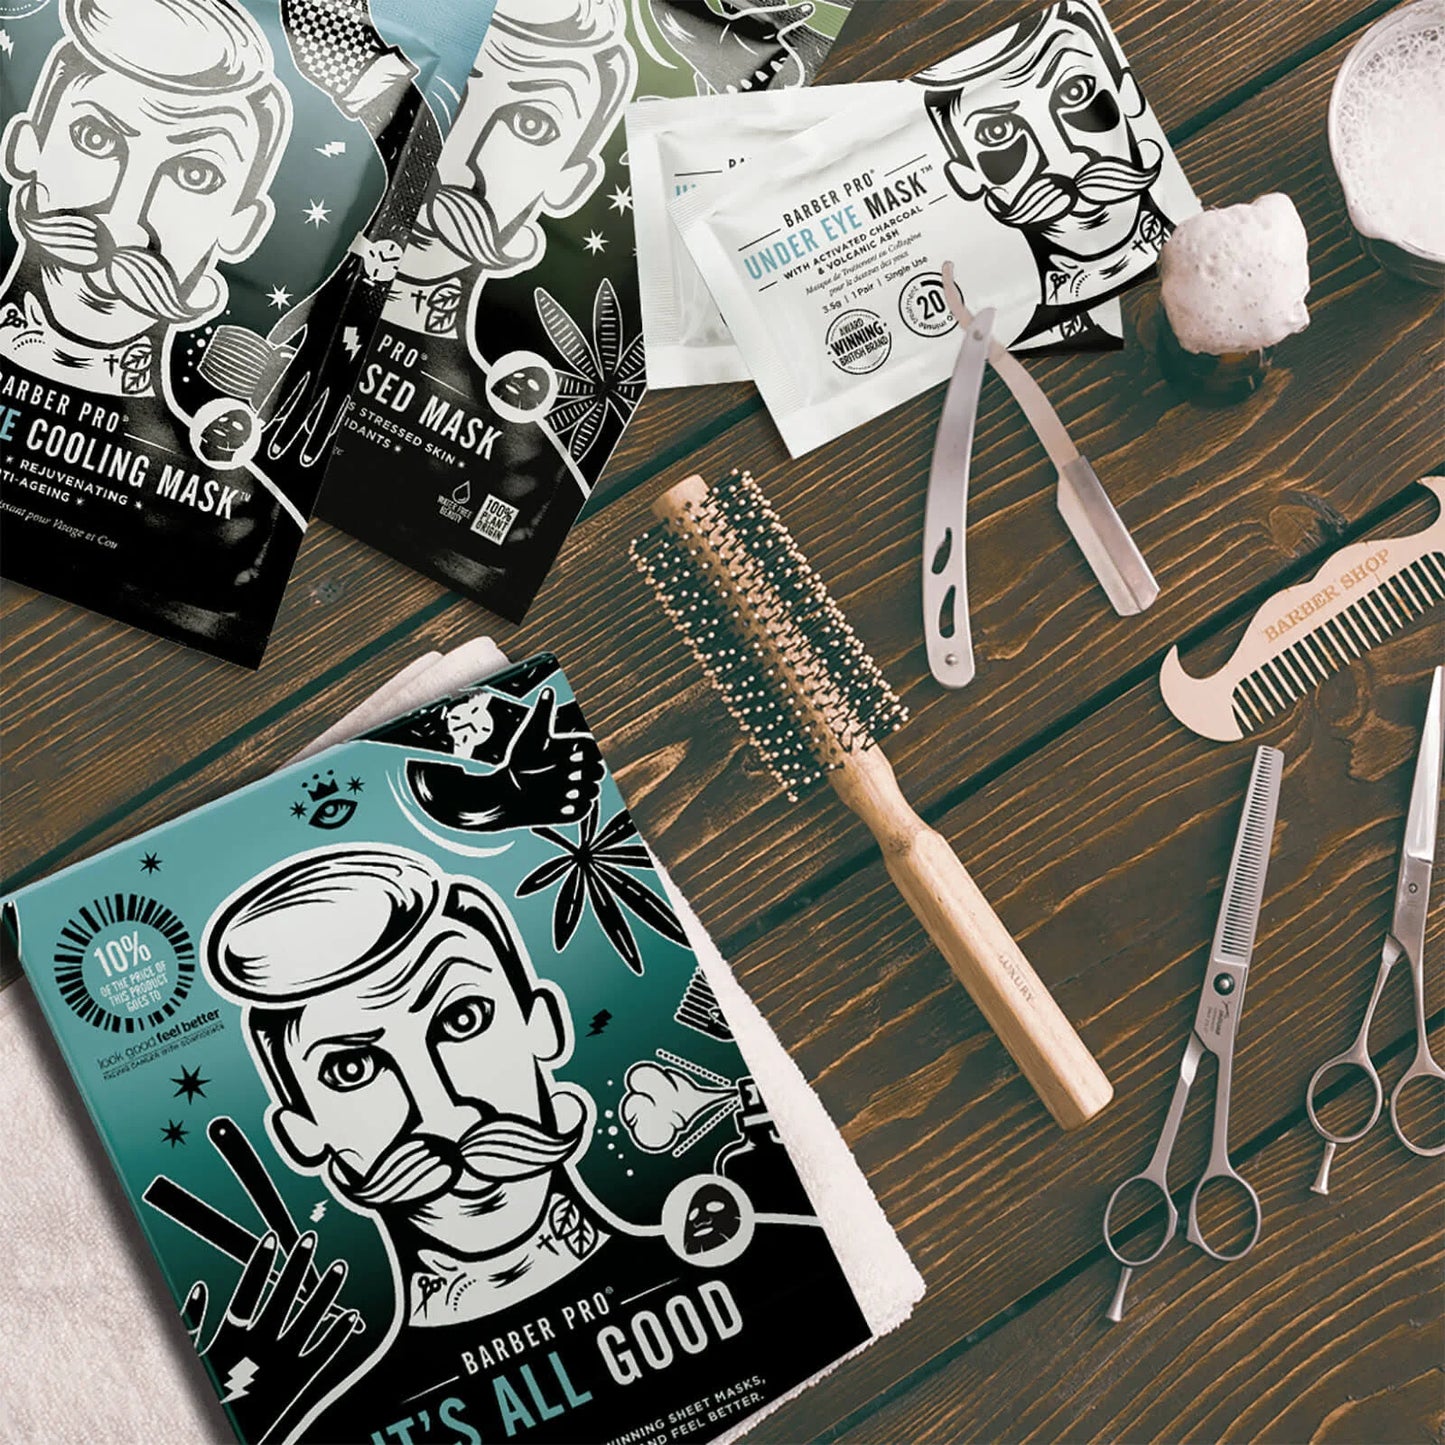 Barber Pro 'It's All Good' Face Mask Set